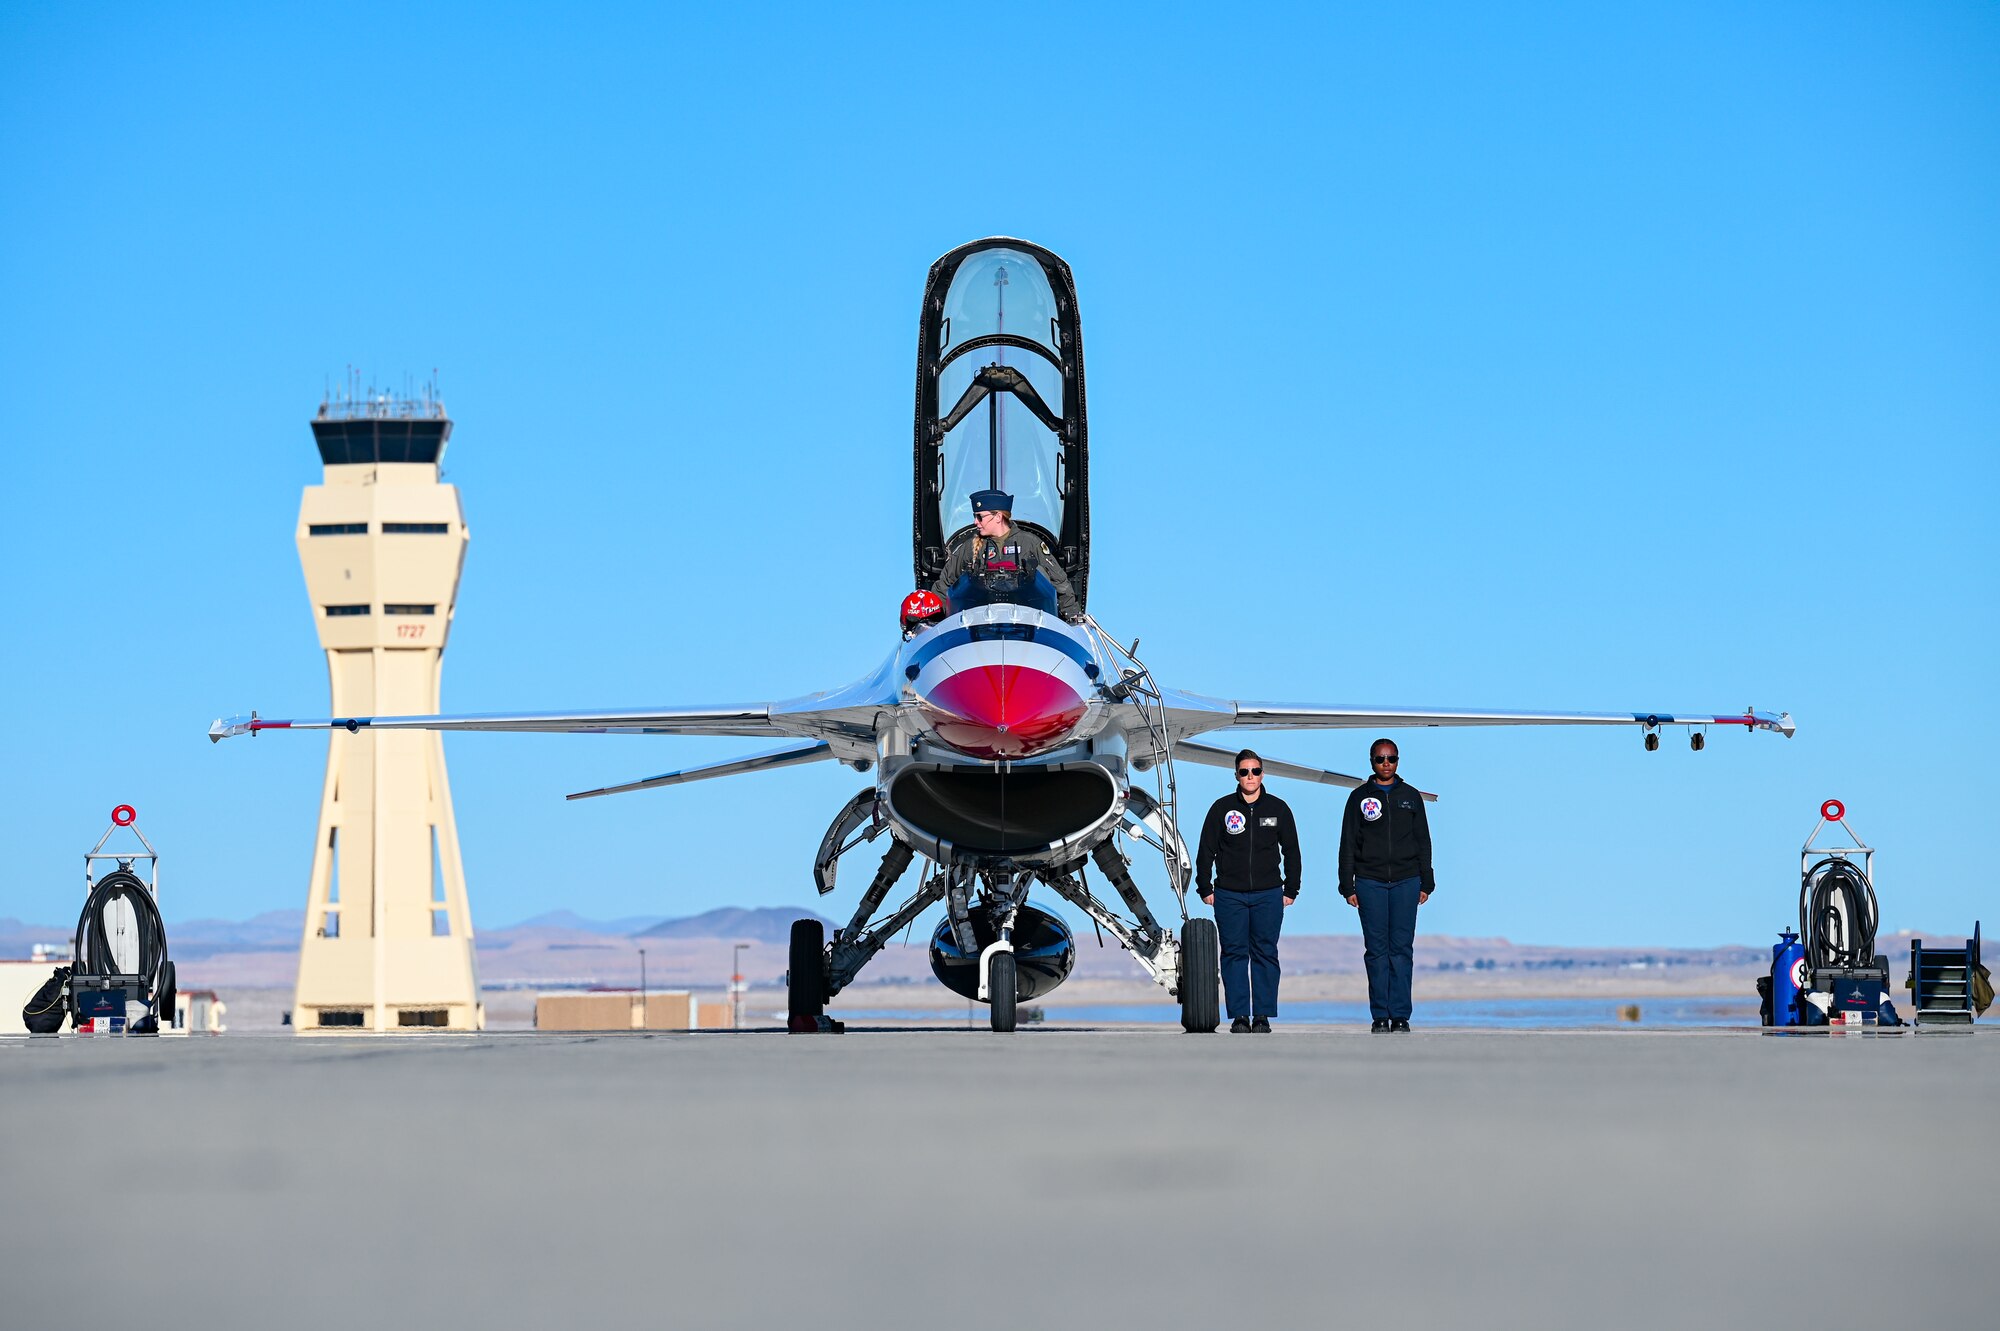 Thunderbirds conduct winter training